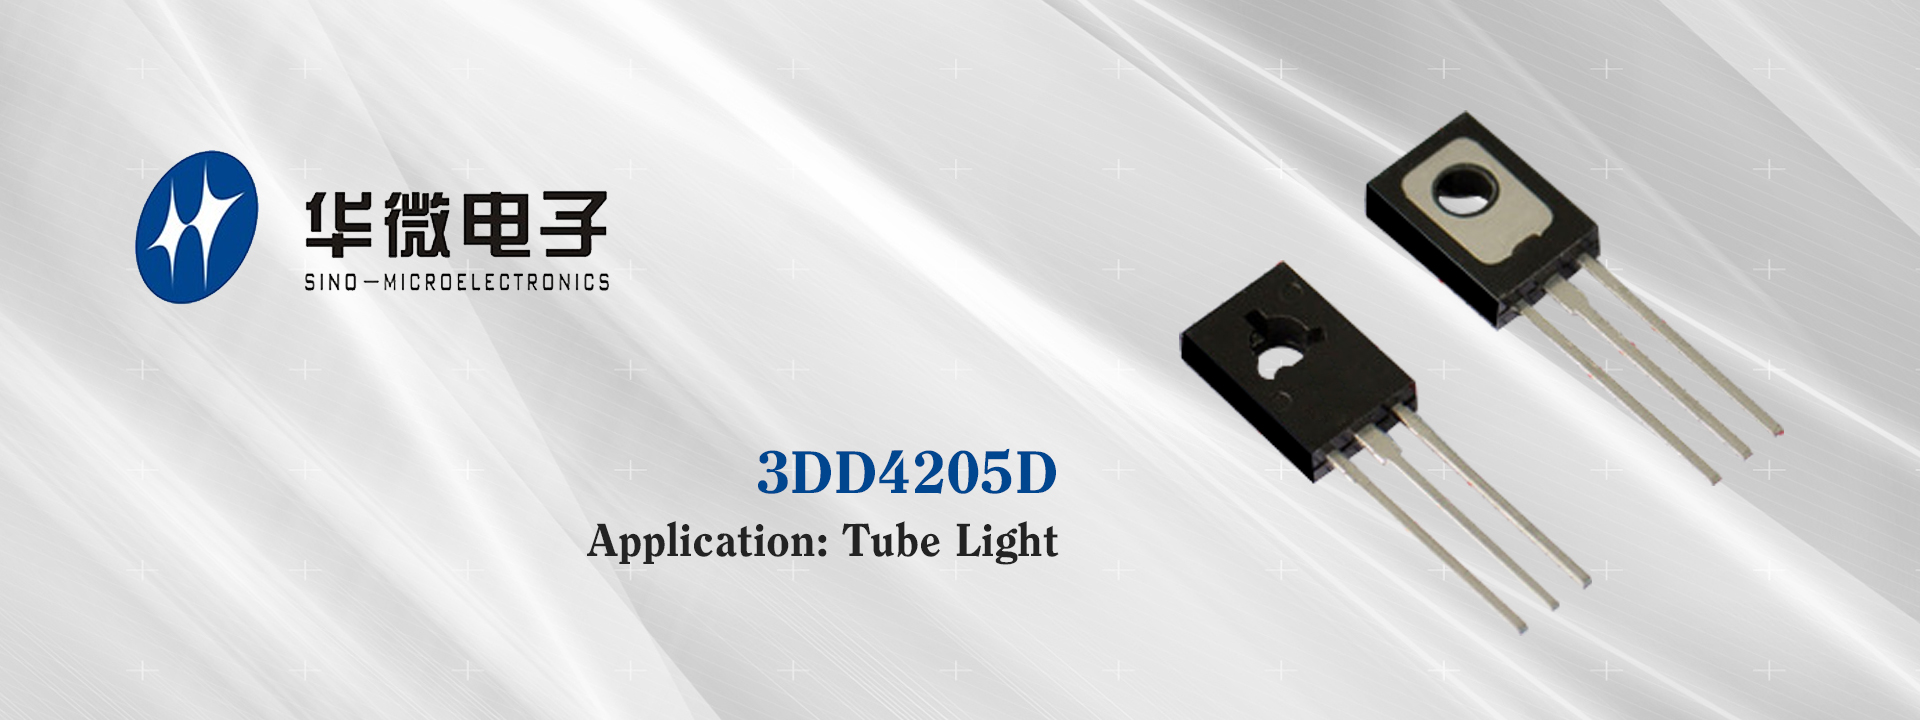 SINO-MICROELECTRONICS 3DD4205D for tube light